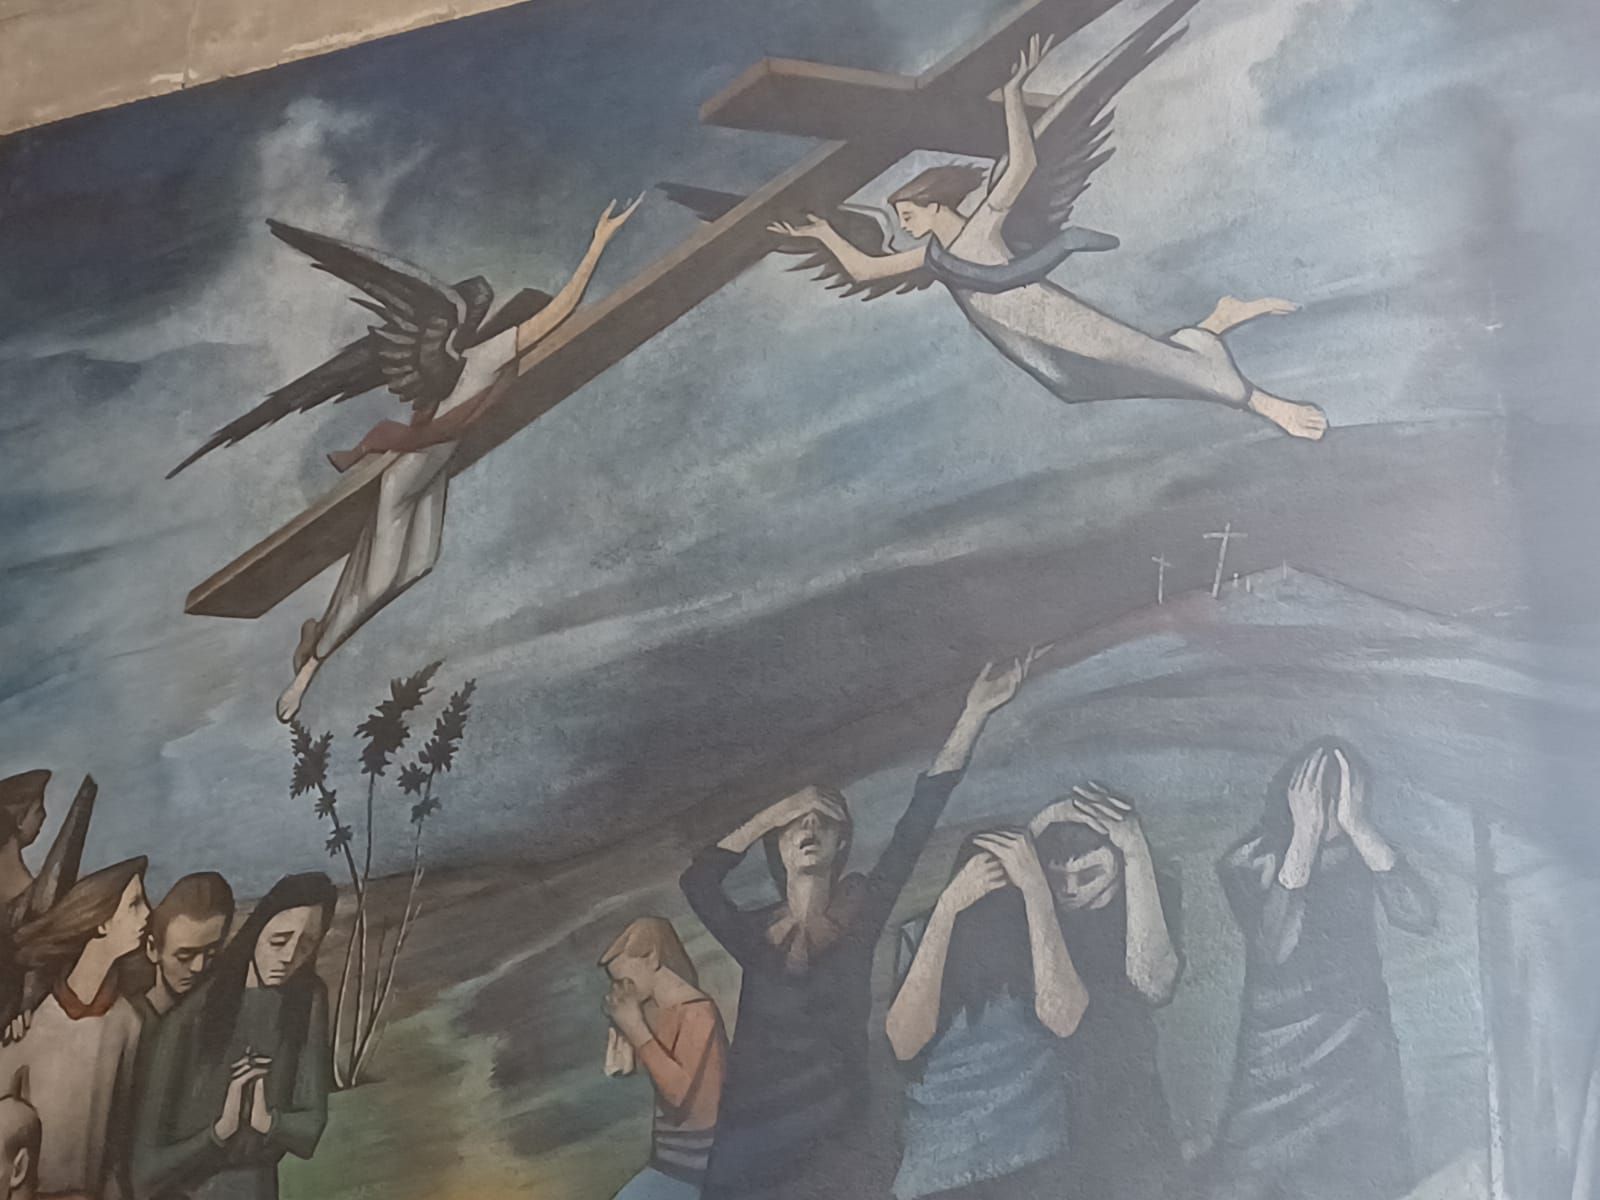 Los otros murales de Siero: la impresionante obra de Casimiro Baragaña en la iglesia de la Pola